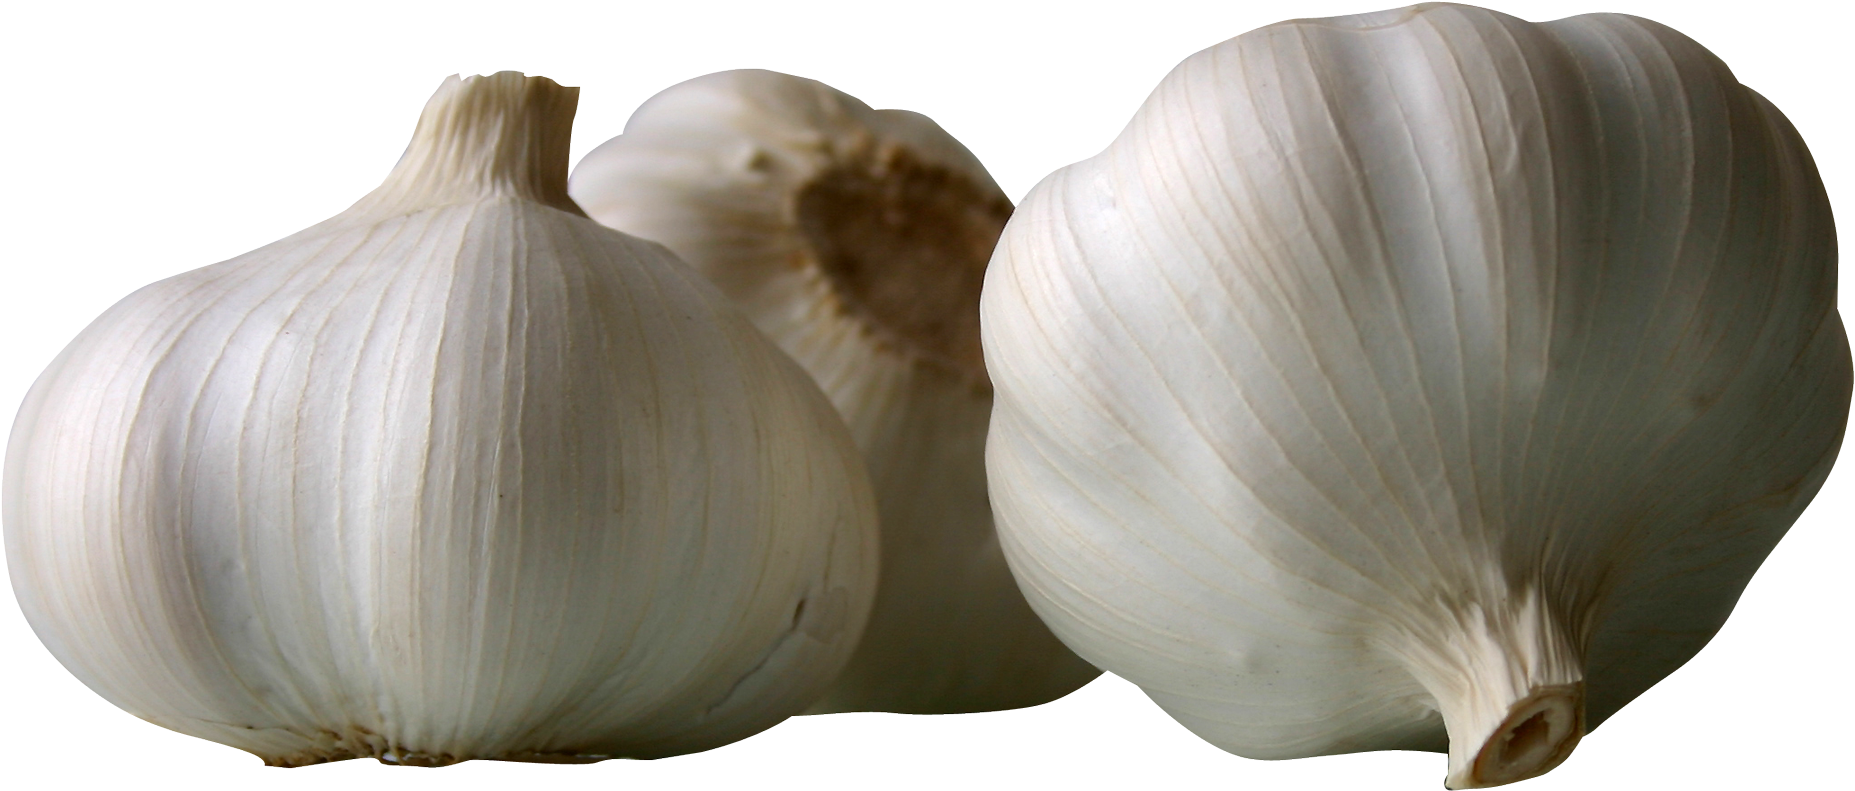 1968 X 948 Garlic